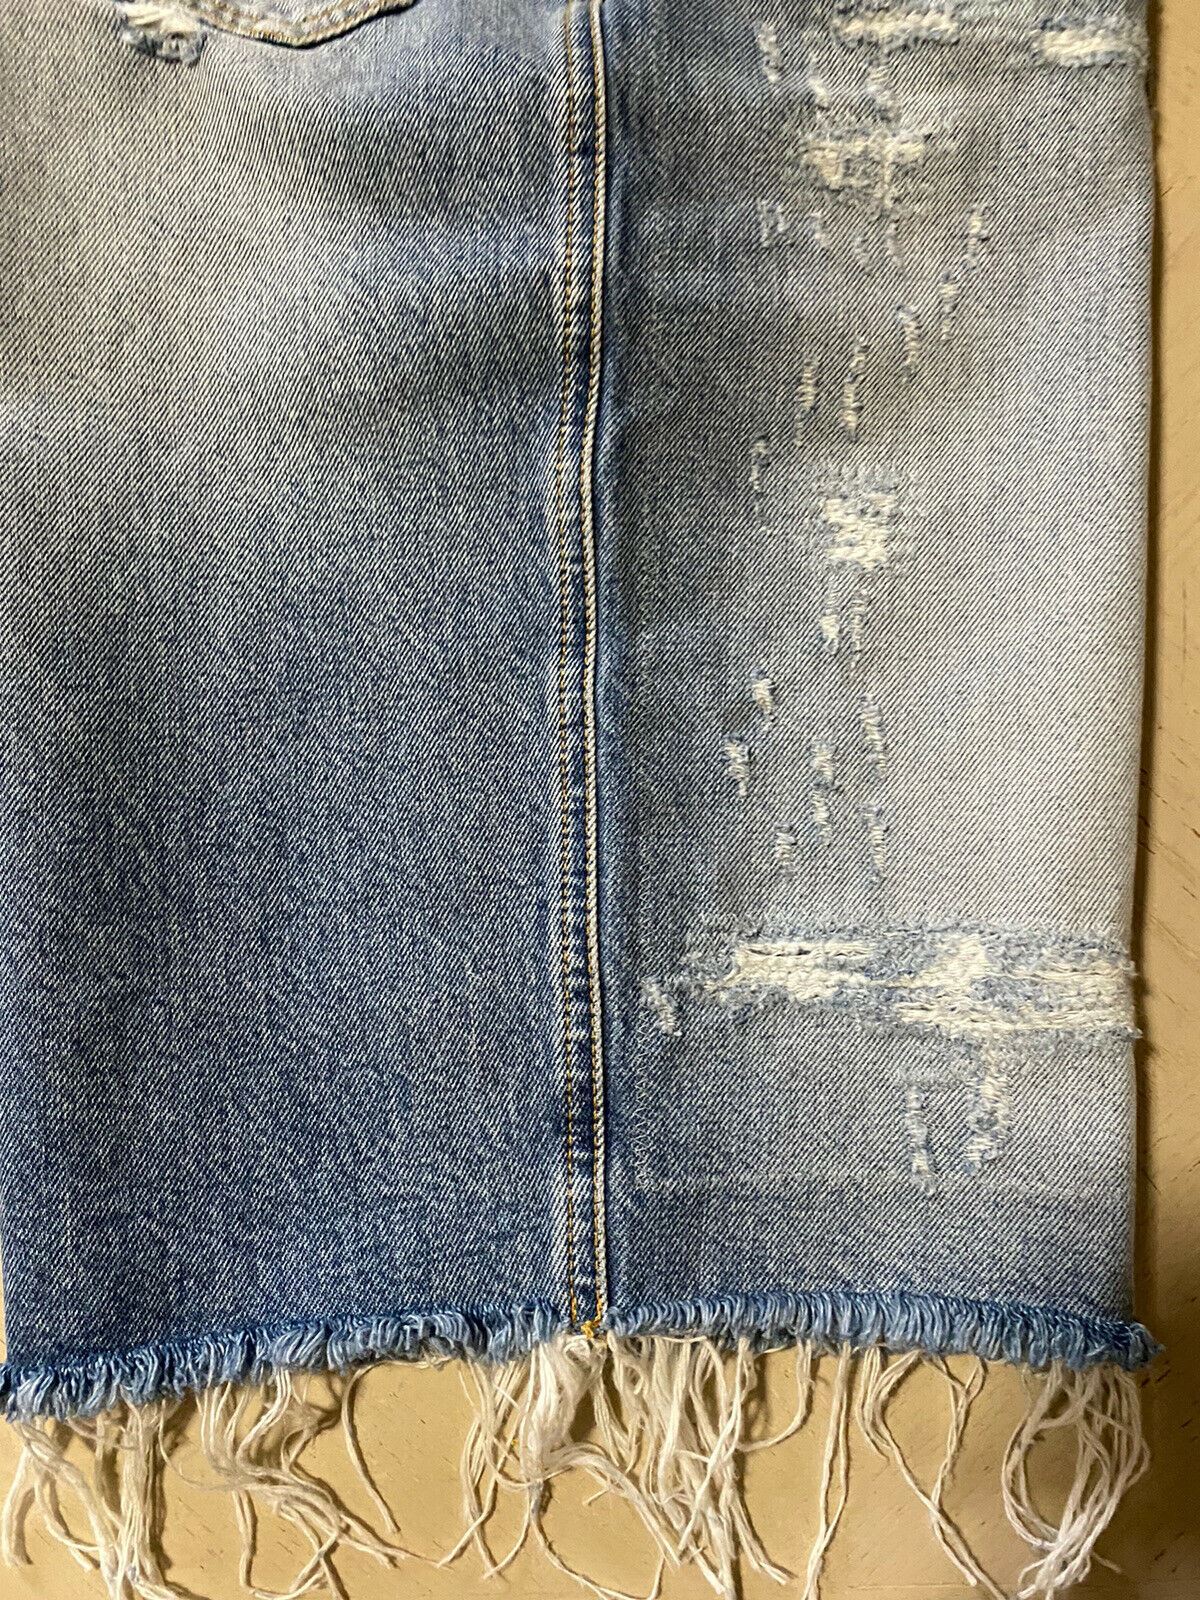 NWT $1500 Gucci Mens Short Jeans Pants Blue Size 30 US/44 Eu